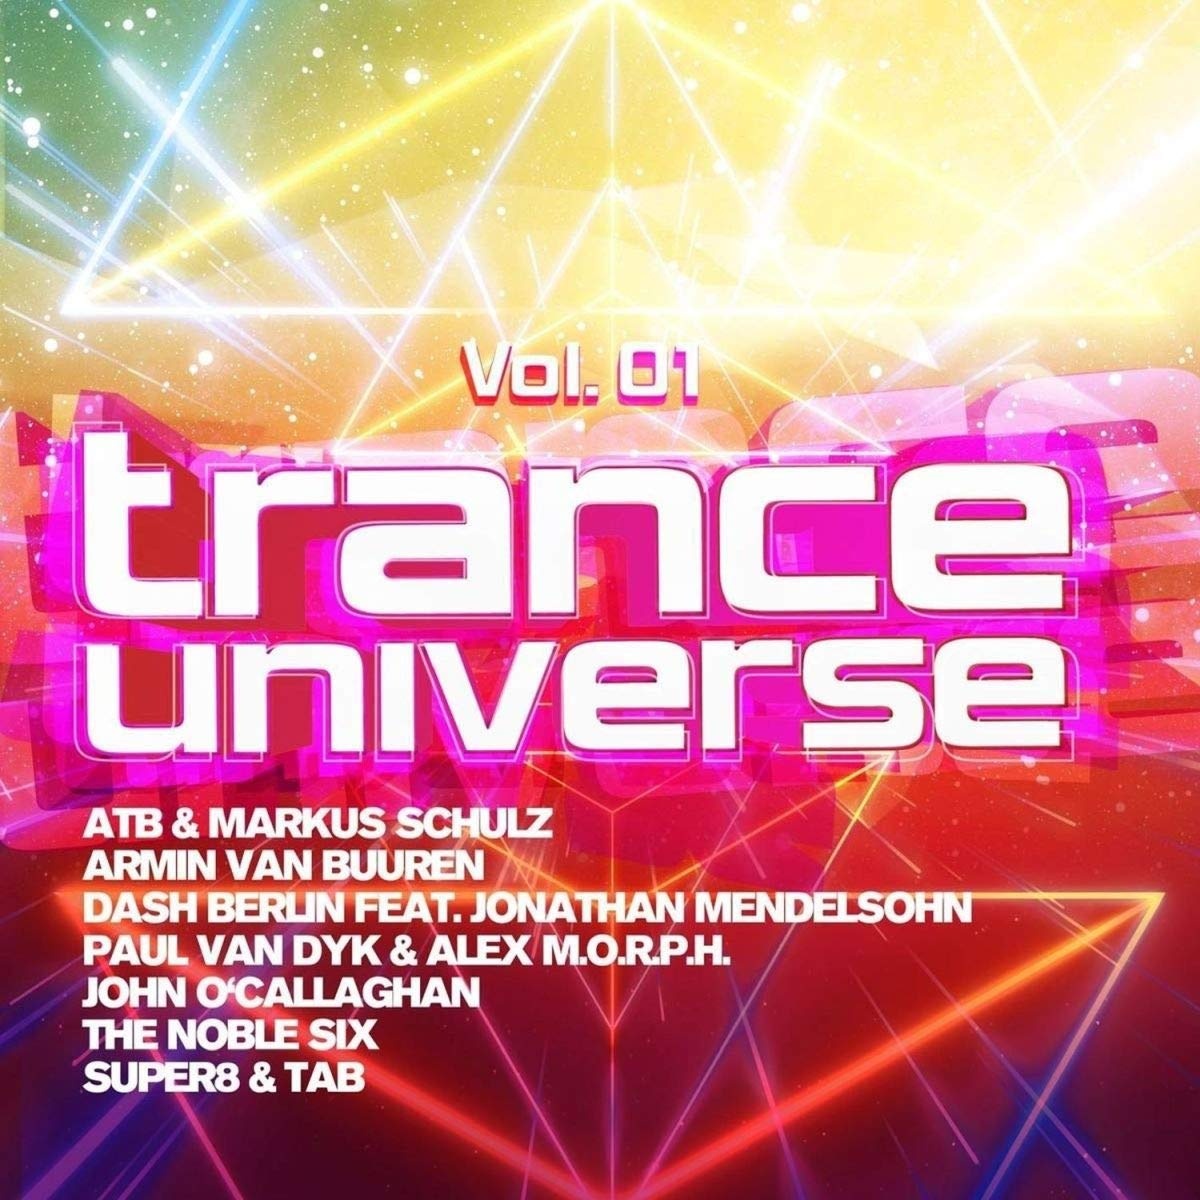 Va trance. Trance Universe. Trance Universe Vol. 2. Dash Berlin feat. Jonathan Mendelsohn – Locked out of Heaven. Sean Tyas feat. Victoriya - perfect World.